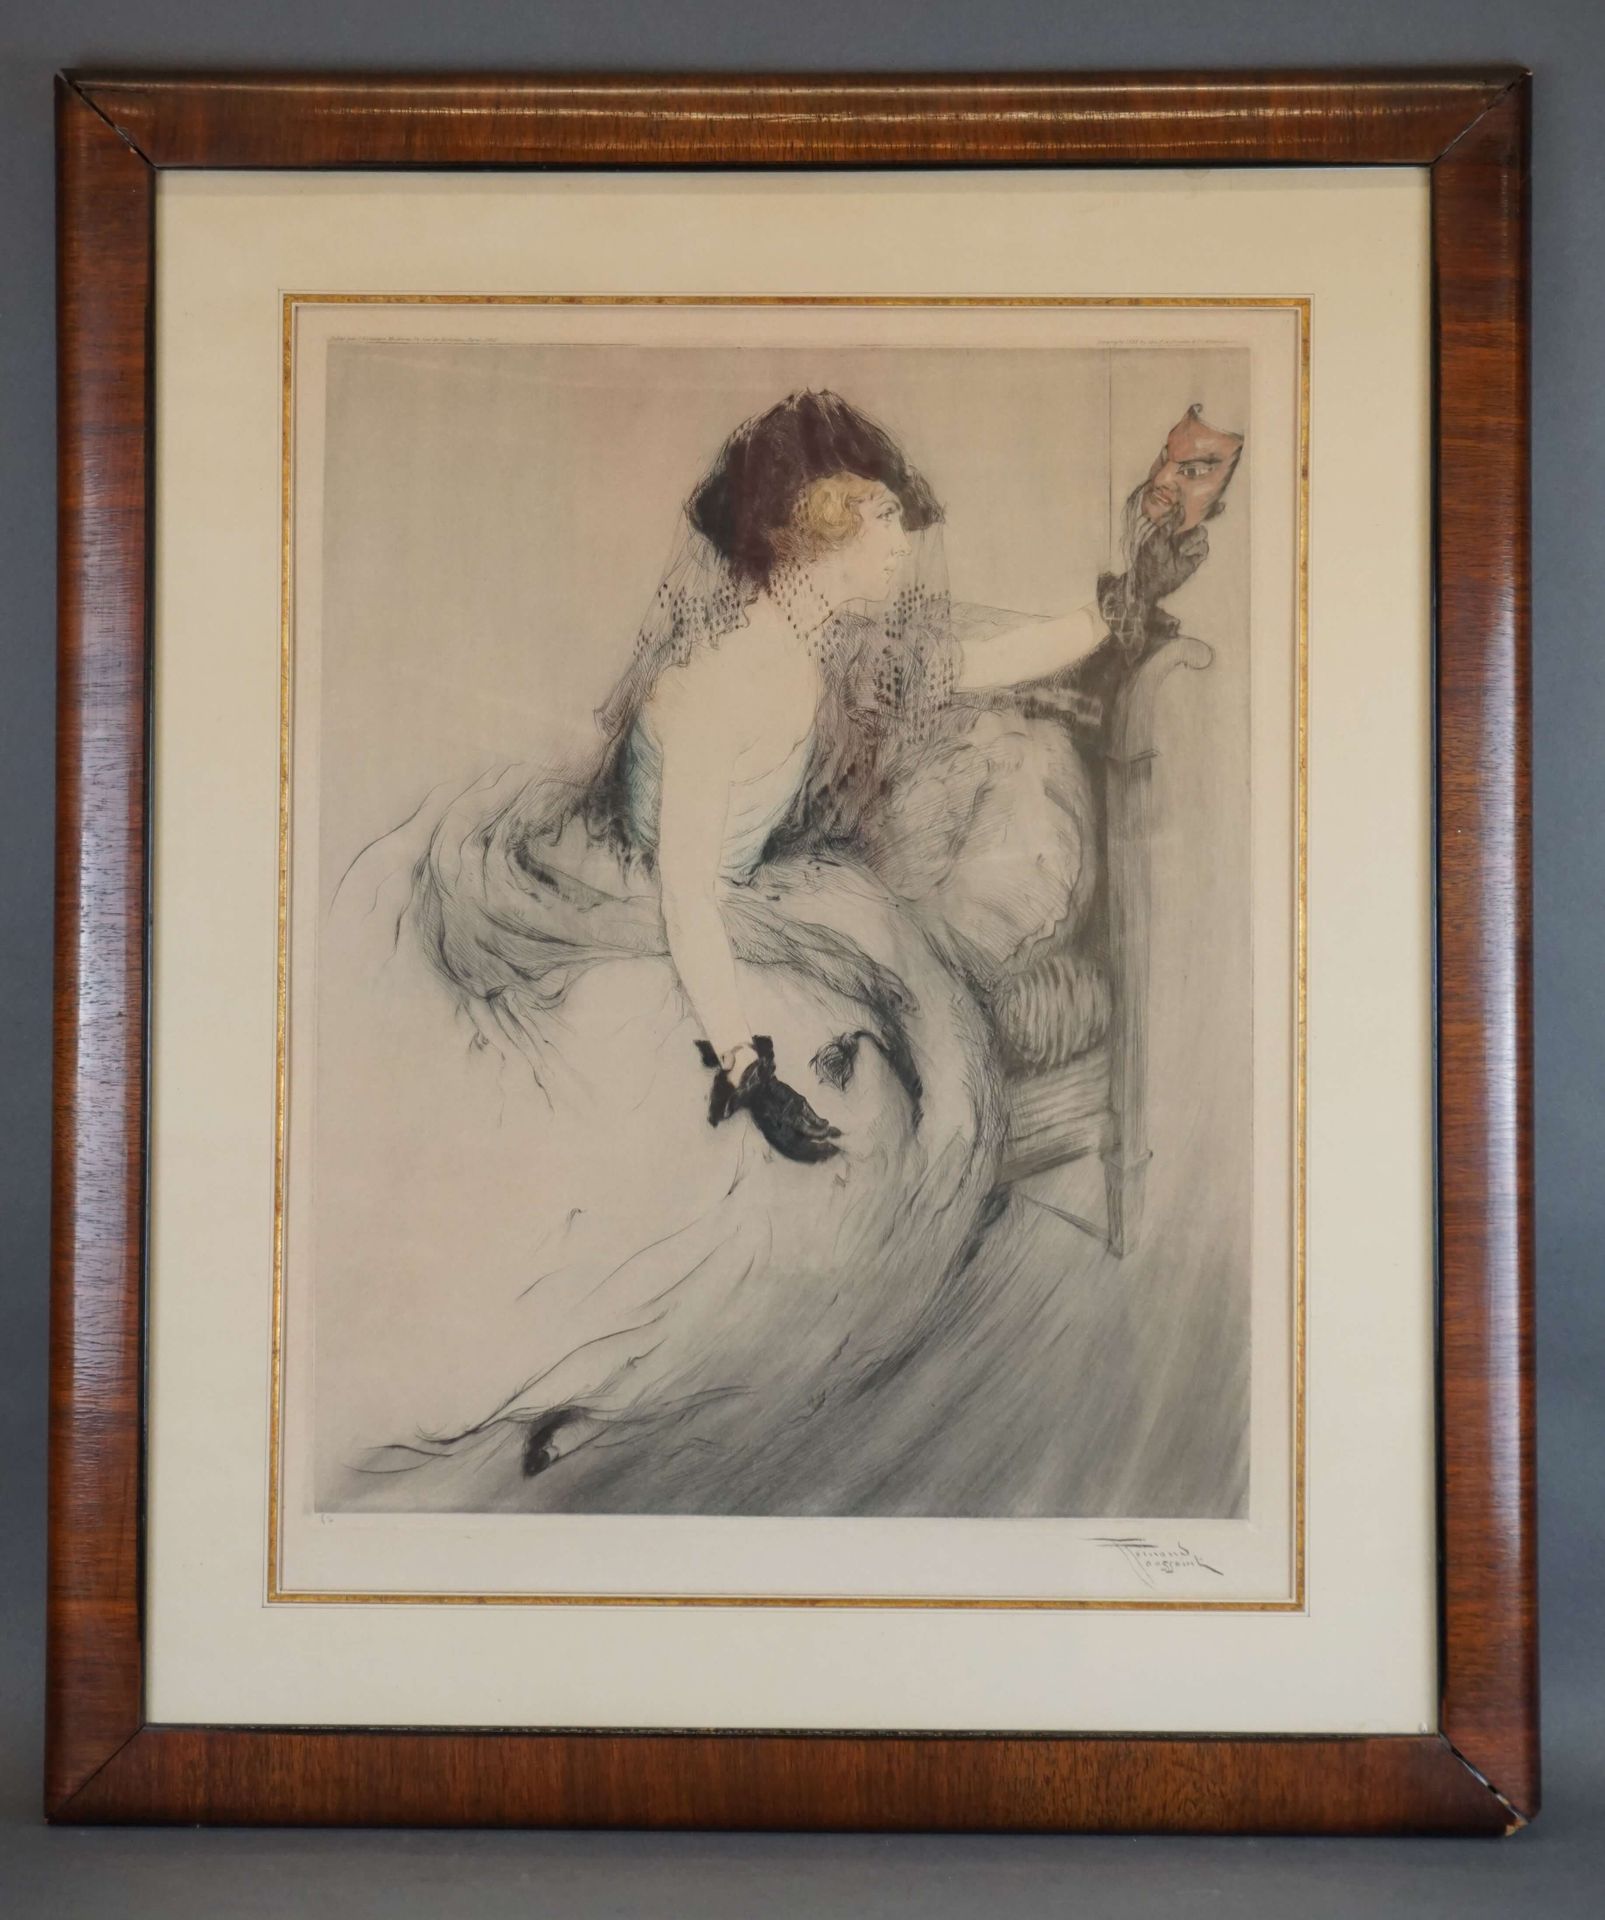 TOUSSAINT Fernand (1873-1955) 有费尔南-图桑签名的石版画《戴面具的女人》。54x42厘米